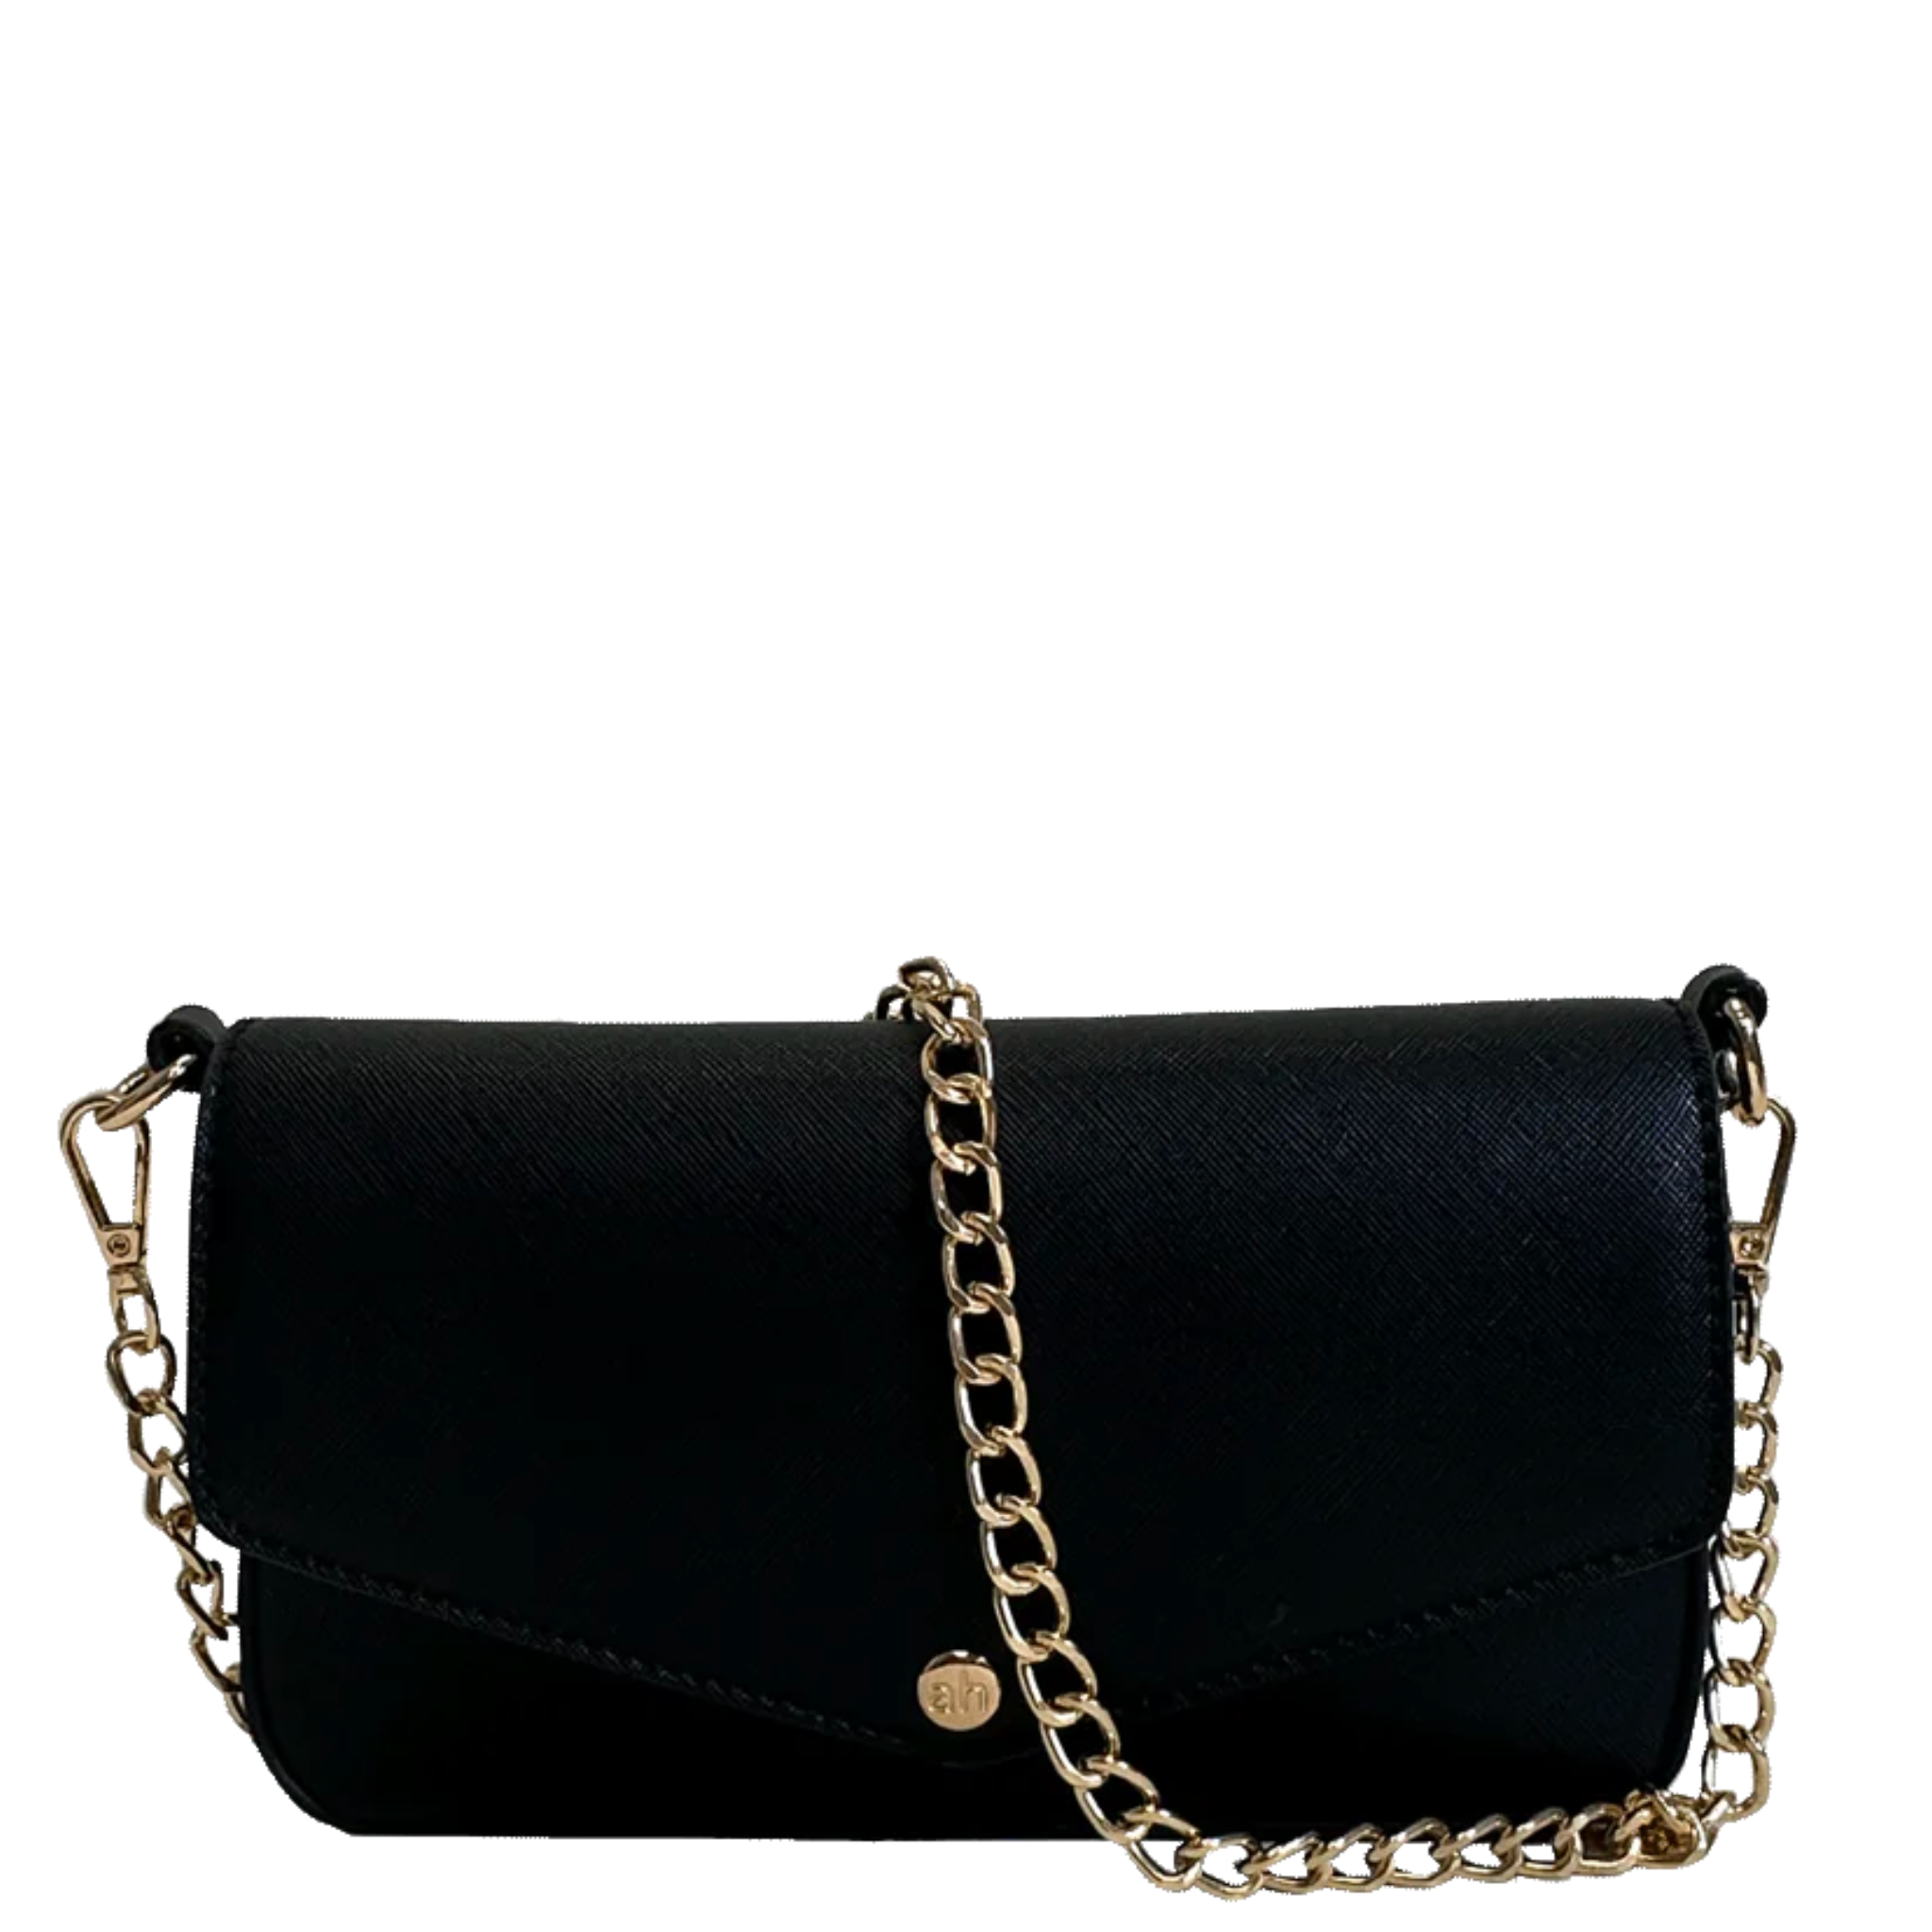 Louise Faux Leather Flap Bag w/Removable Chain Strap